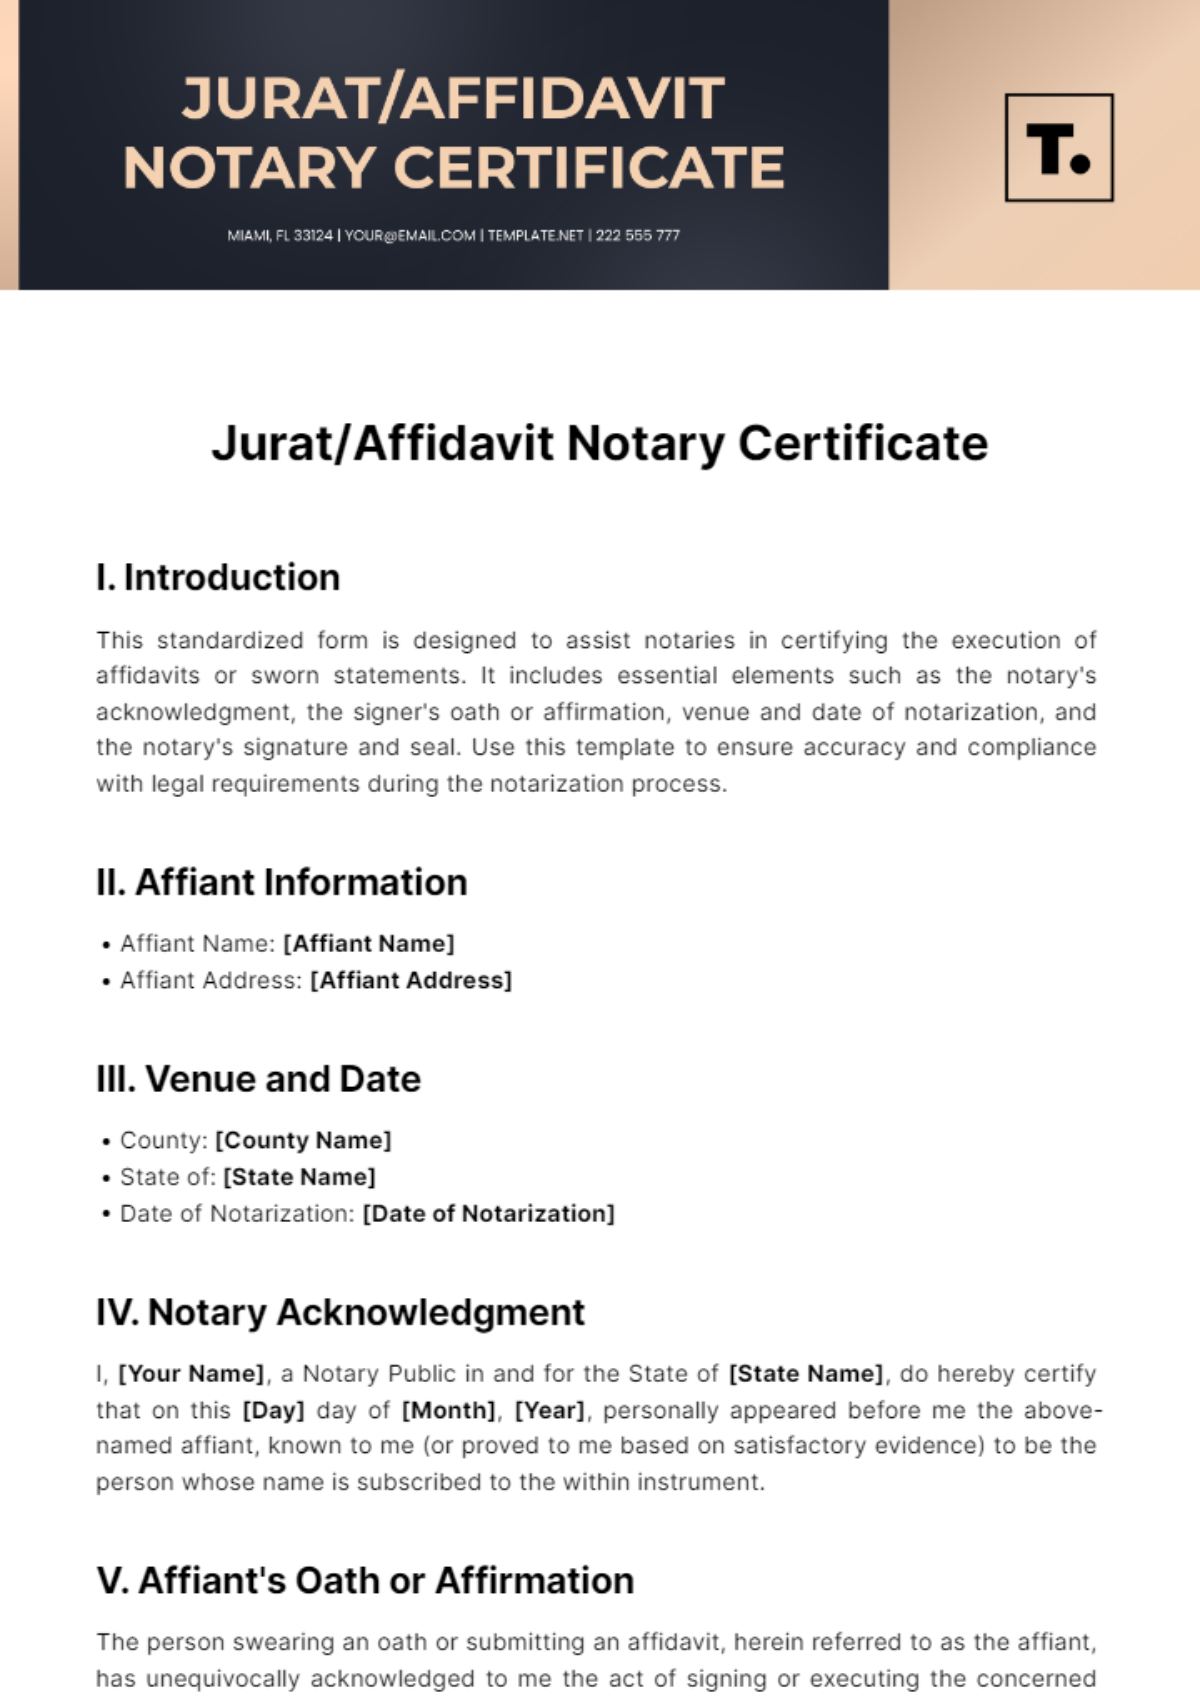 Jurat/Affidavit Notary Certificate Template